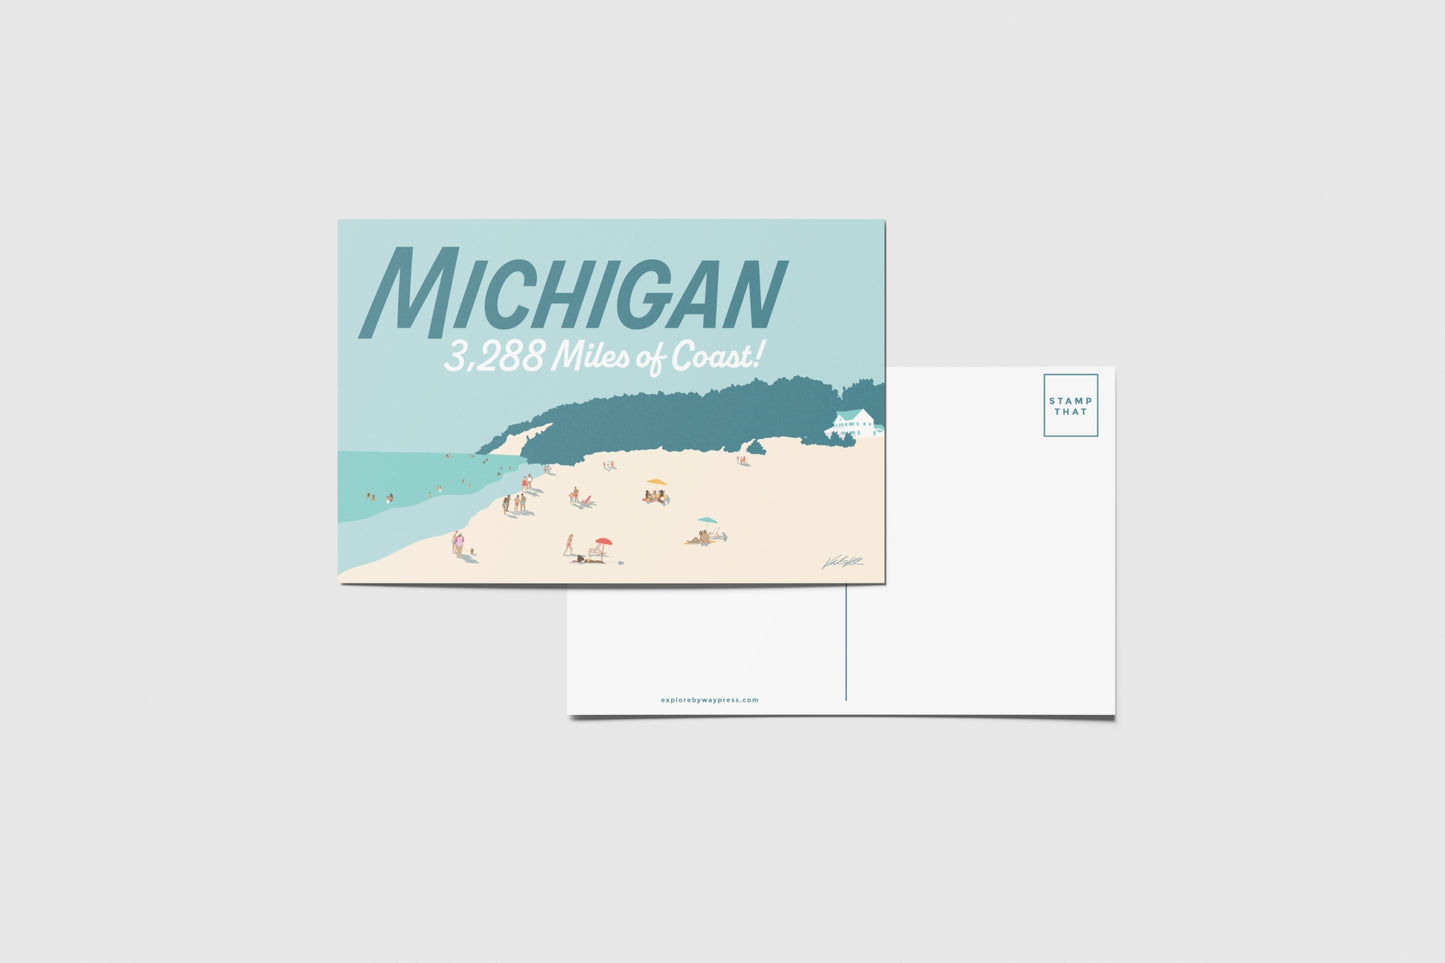 Michigan 3288 Miles of Coast Travel Postcard